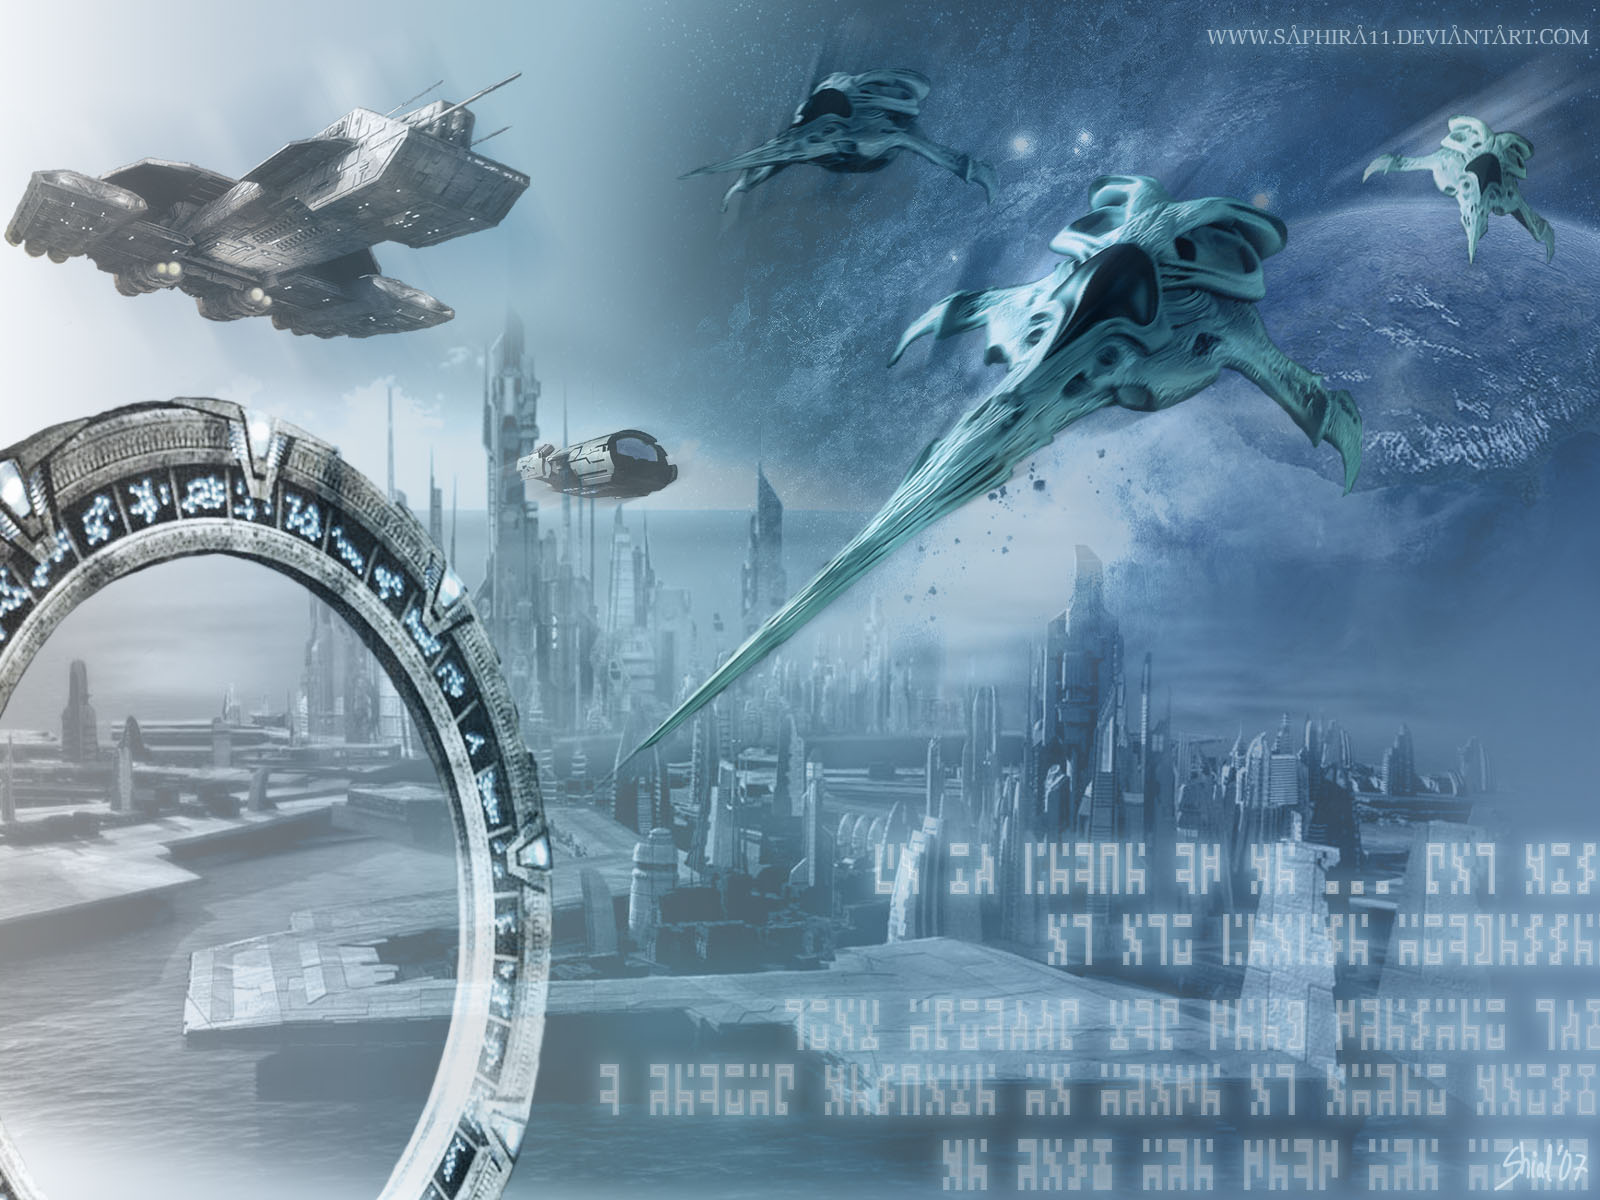 Stargate Atlantis - Stargate: Atlantis Wallpaper (634697) - Fanpop